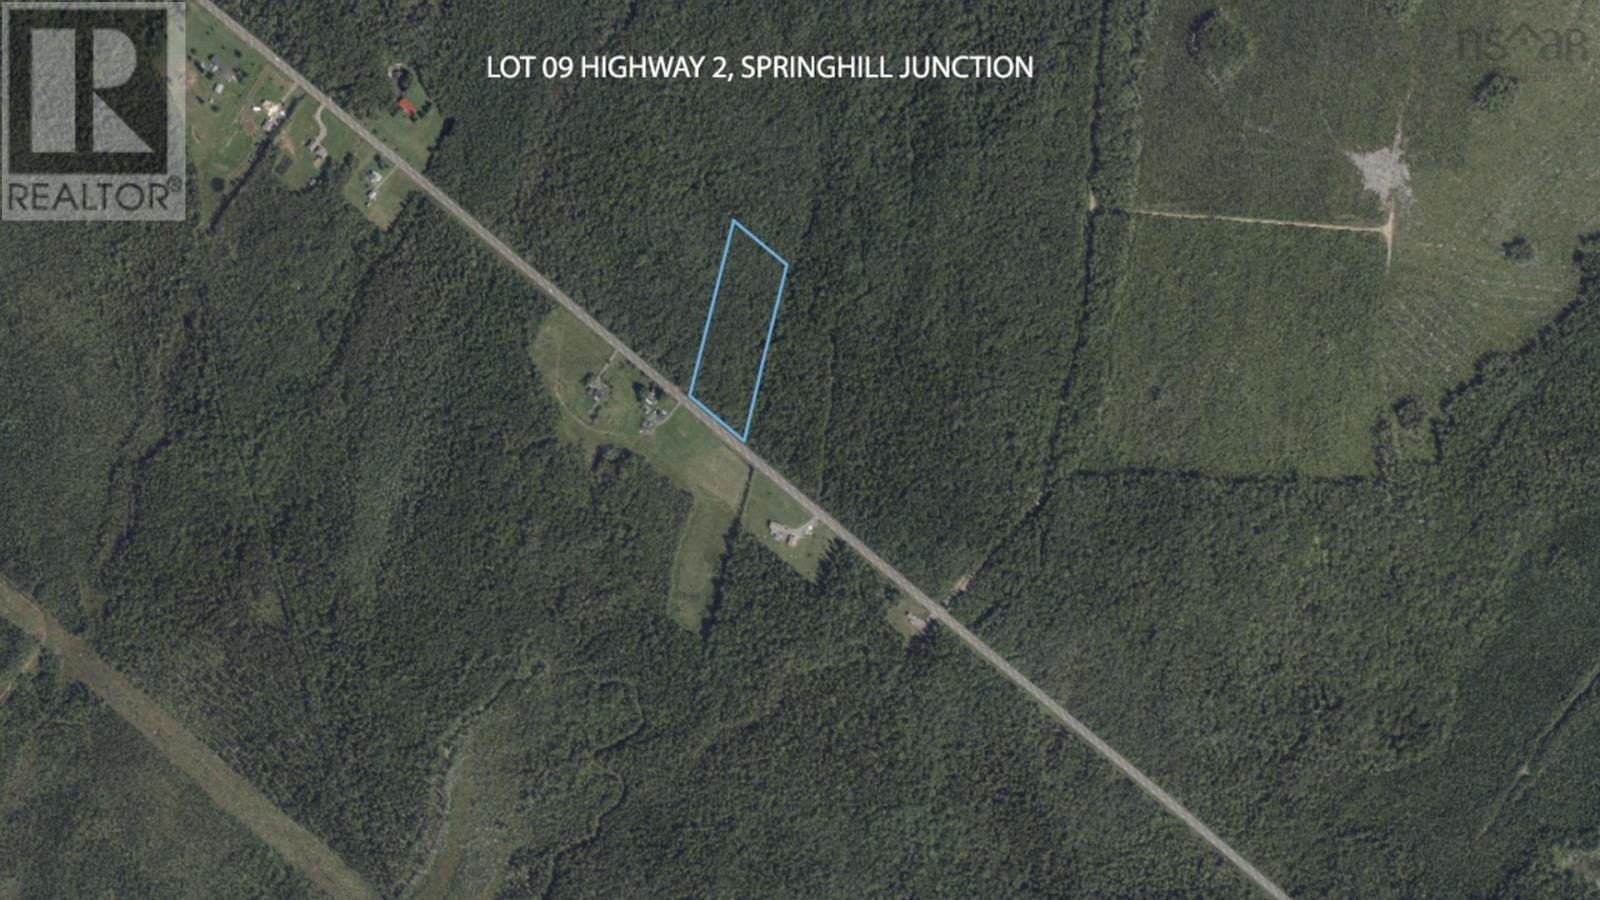 Lot 09 Highway 2, springhill junction, Nova Scotia